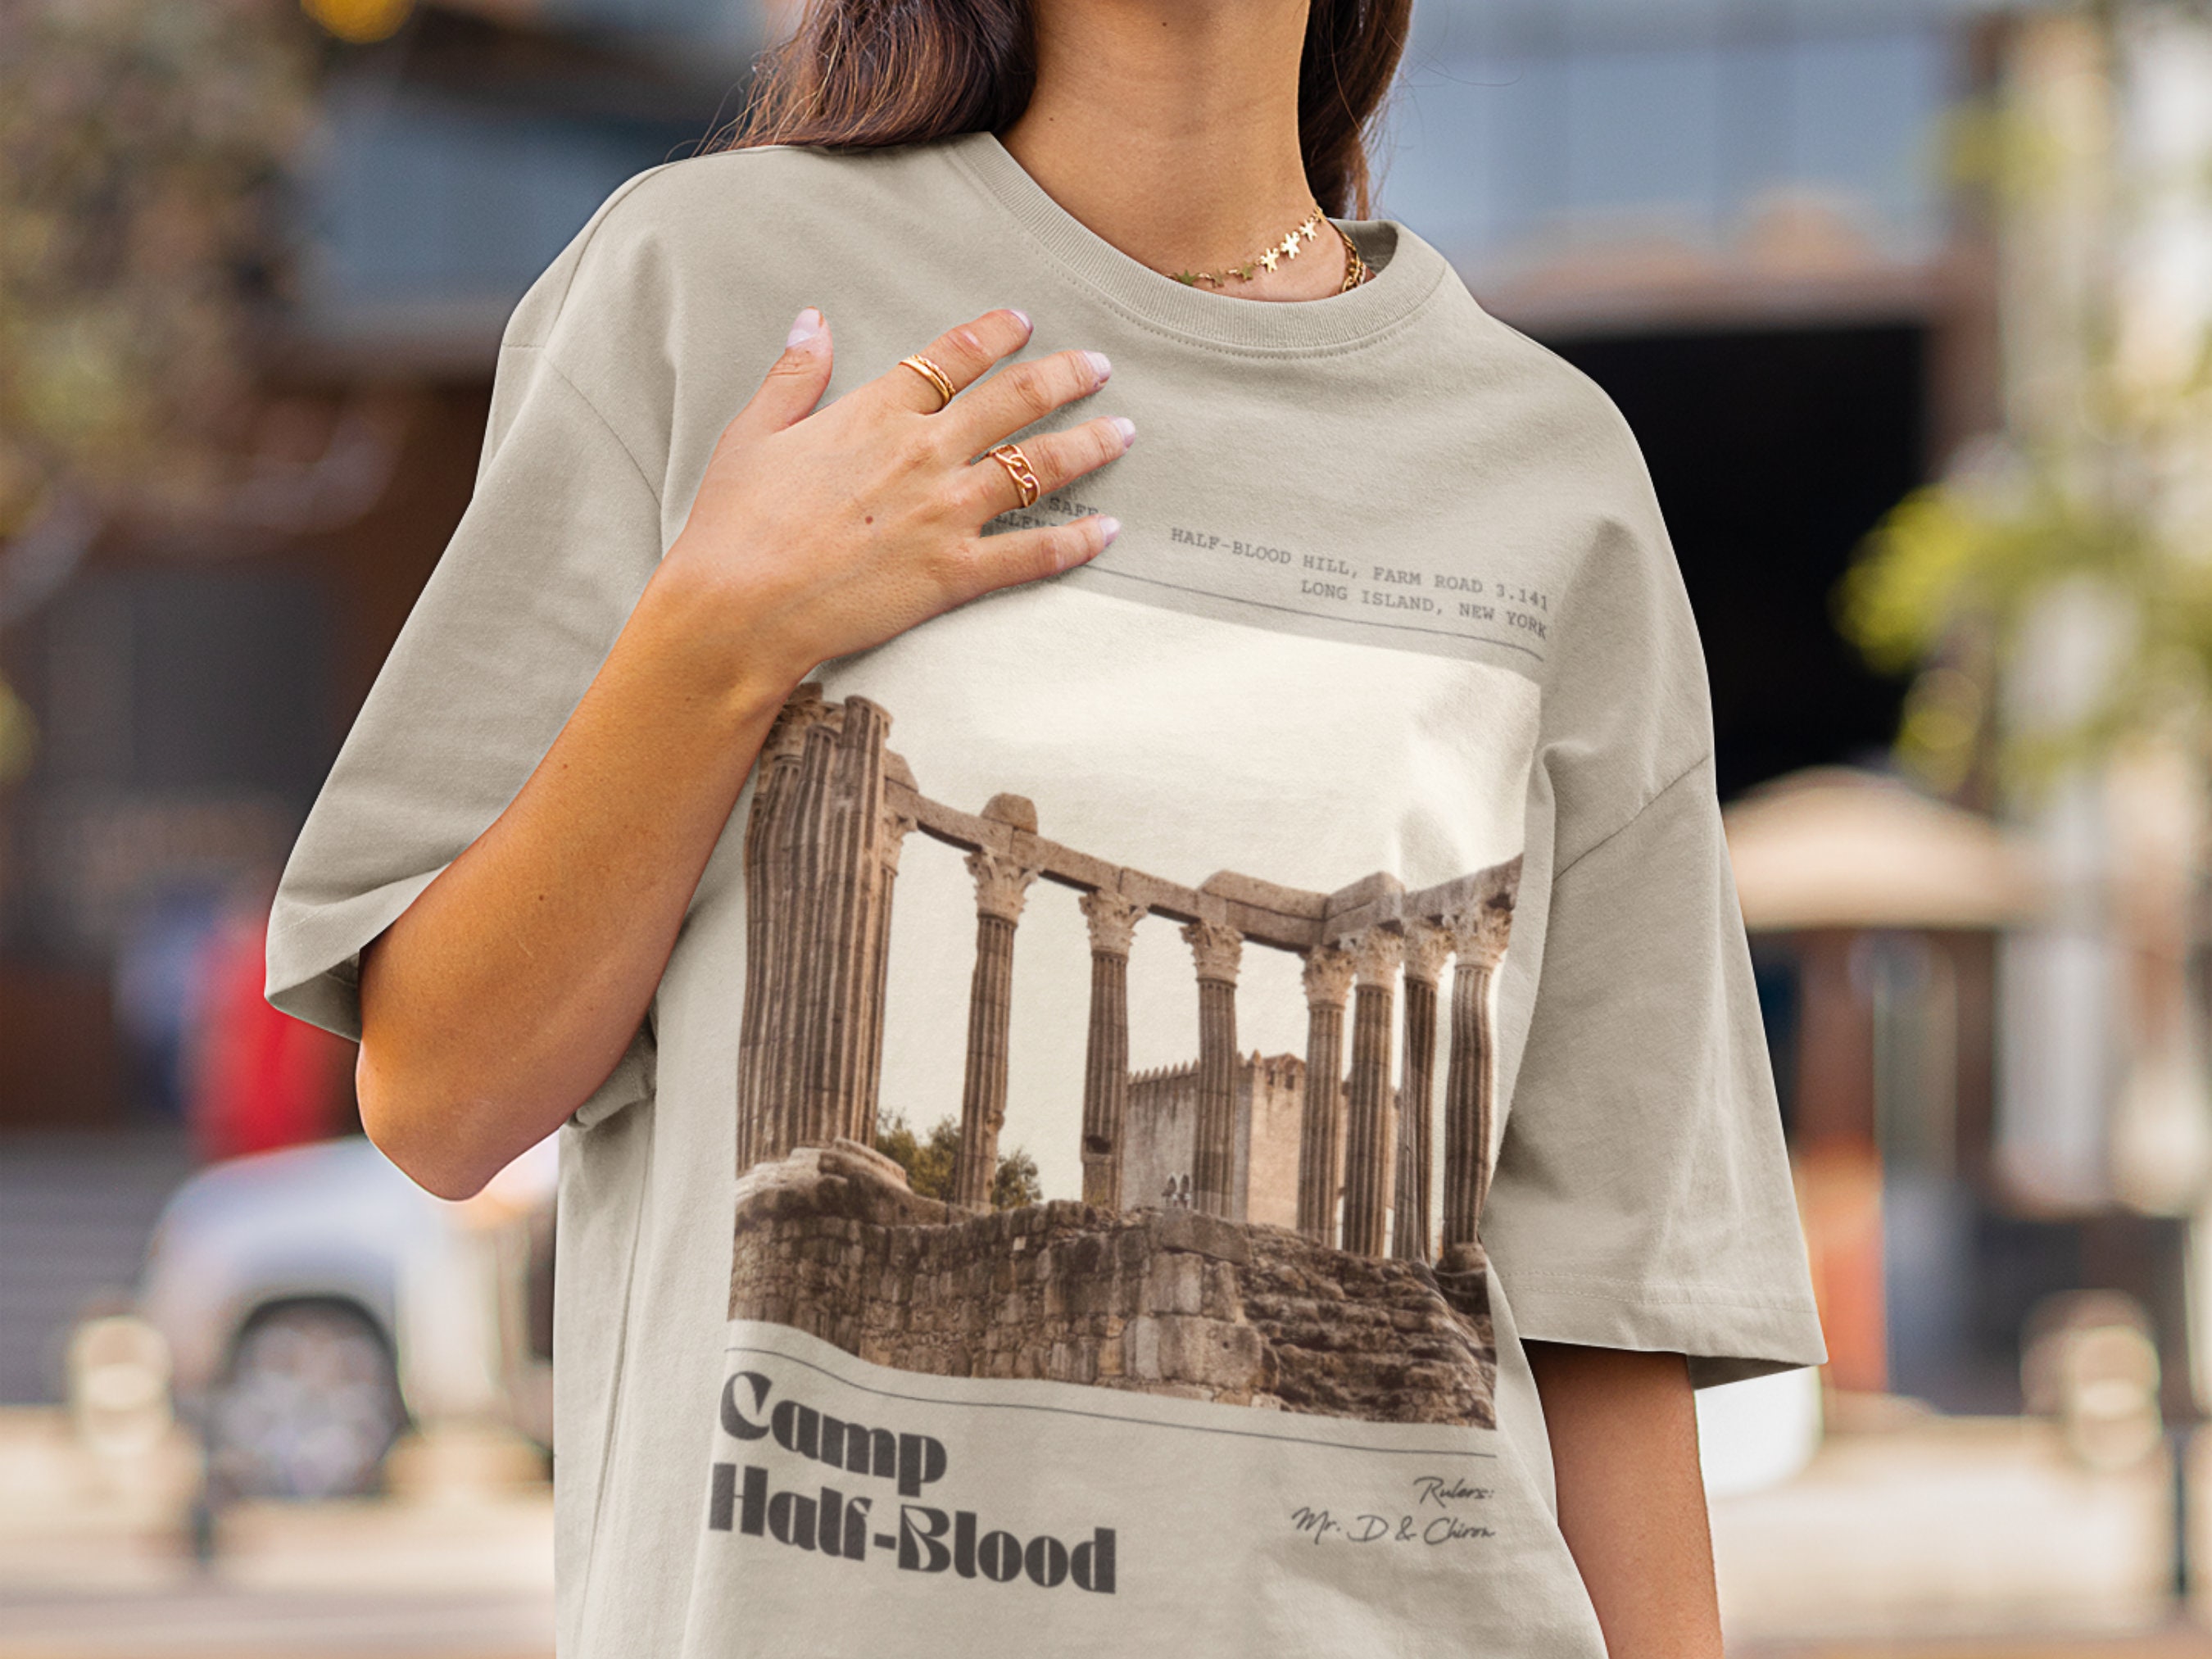 Camp Half Blood Shirt Halfblood Percy Jackson T-Shirt Classic